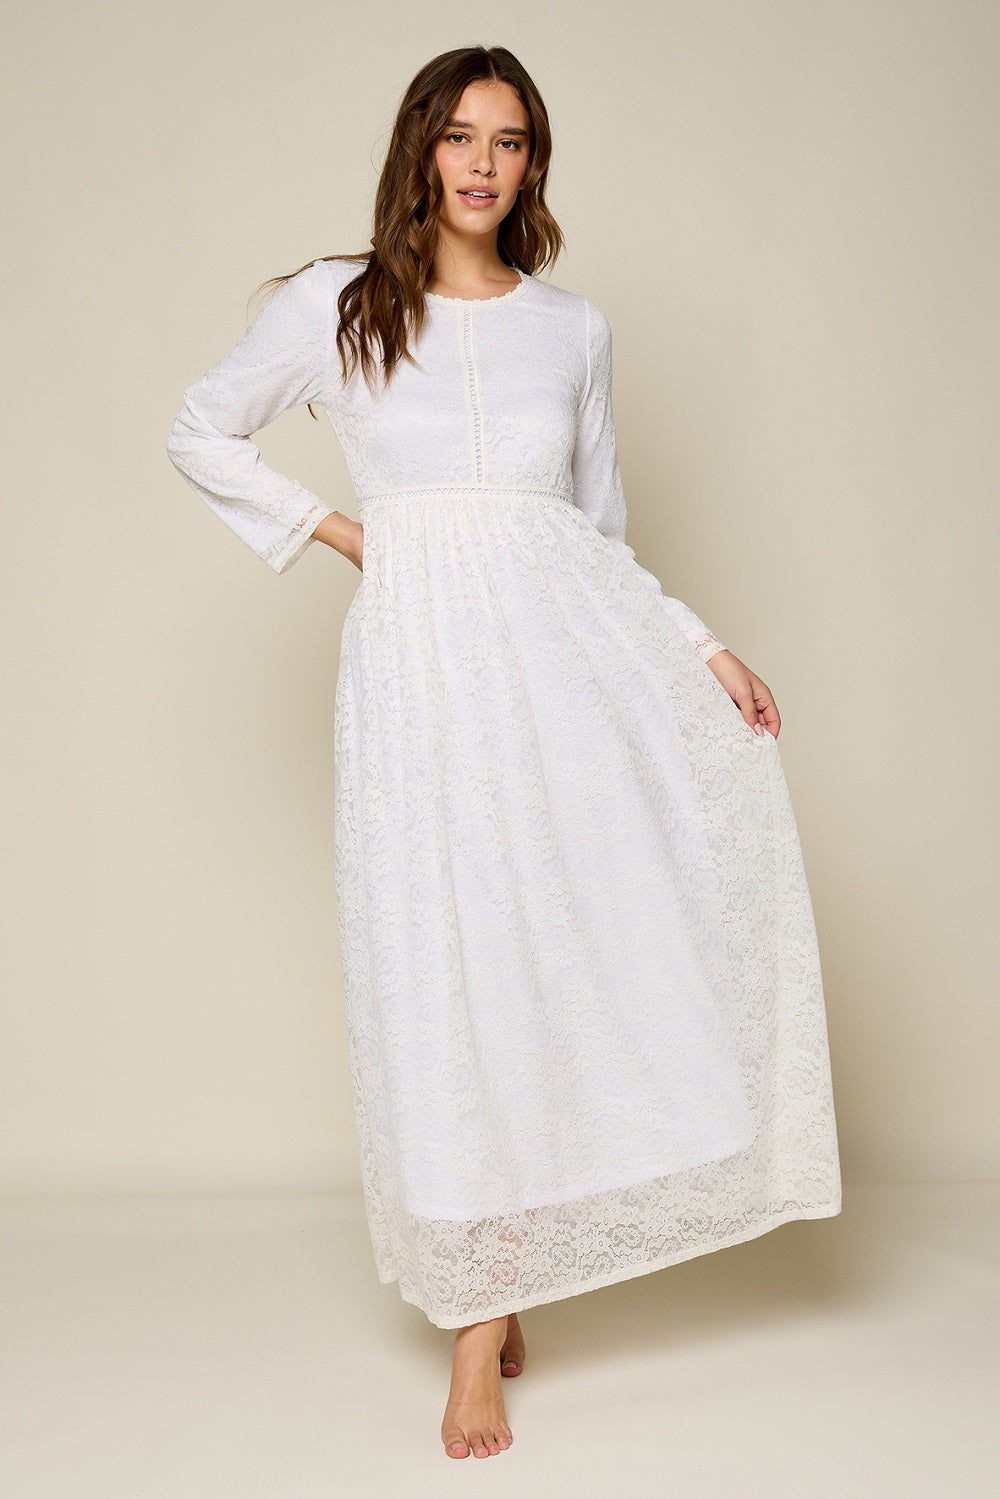 Crystal White Temple Dress / Simple Wedding Dress